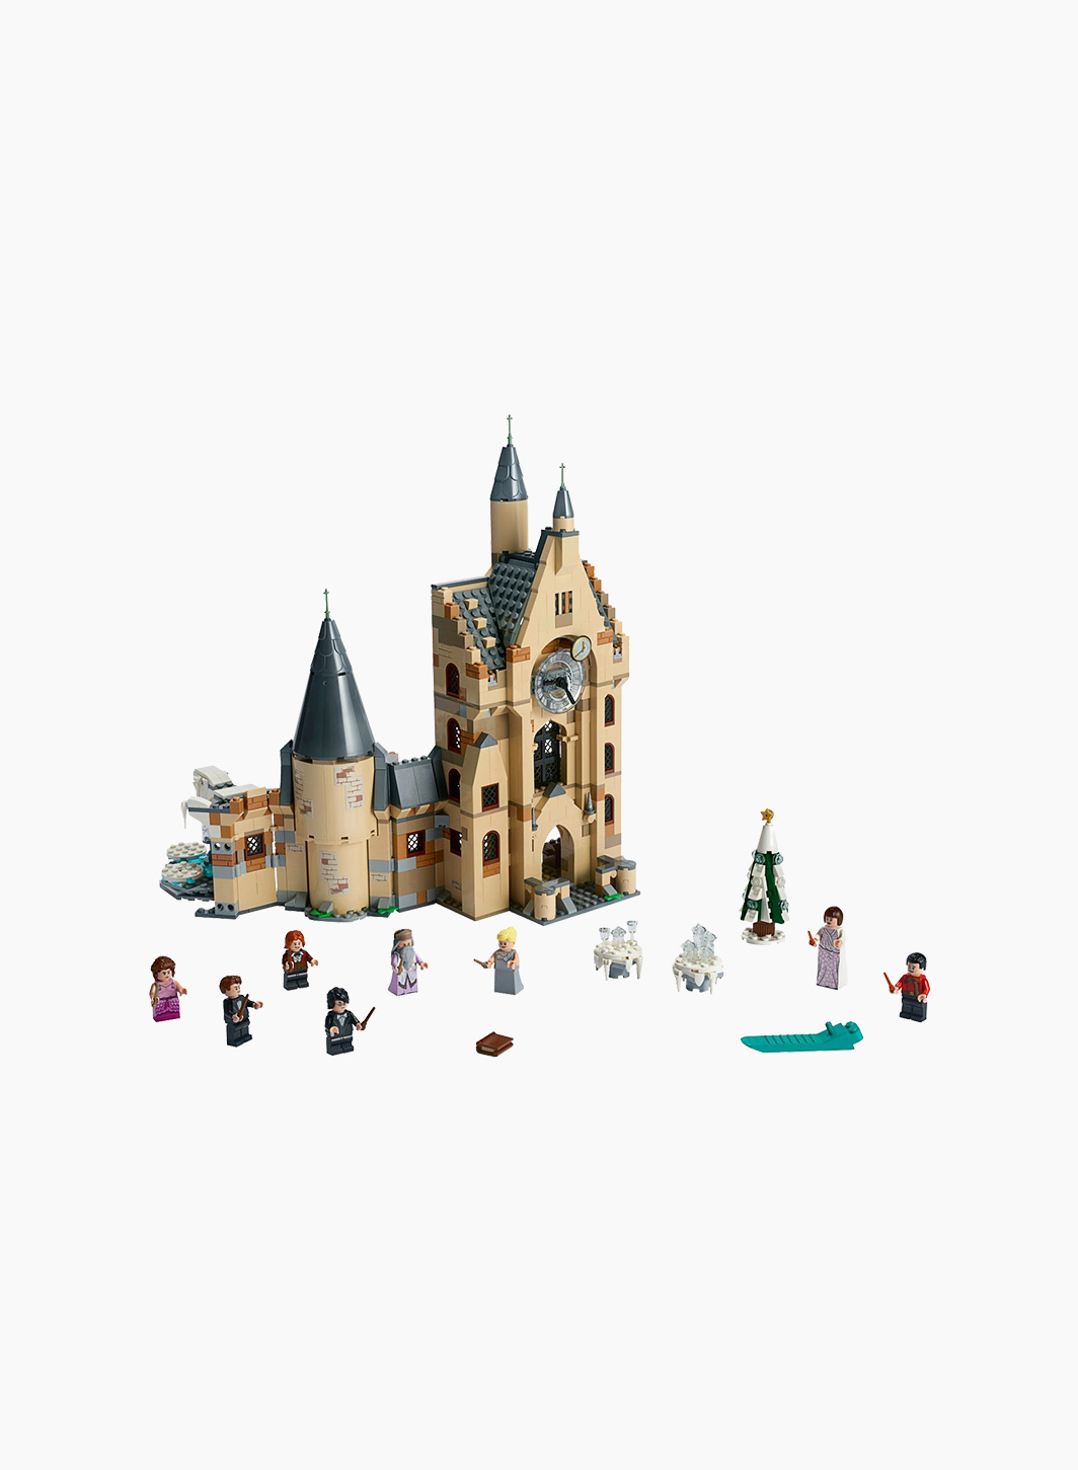 Lego Harry Potter Constructor Hogwarts# Clock Tower